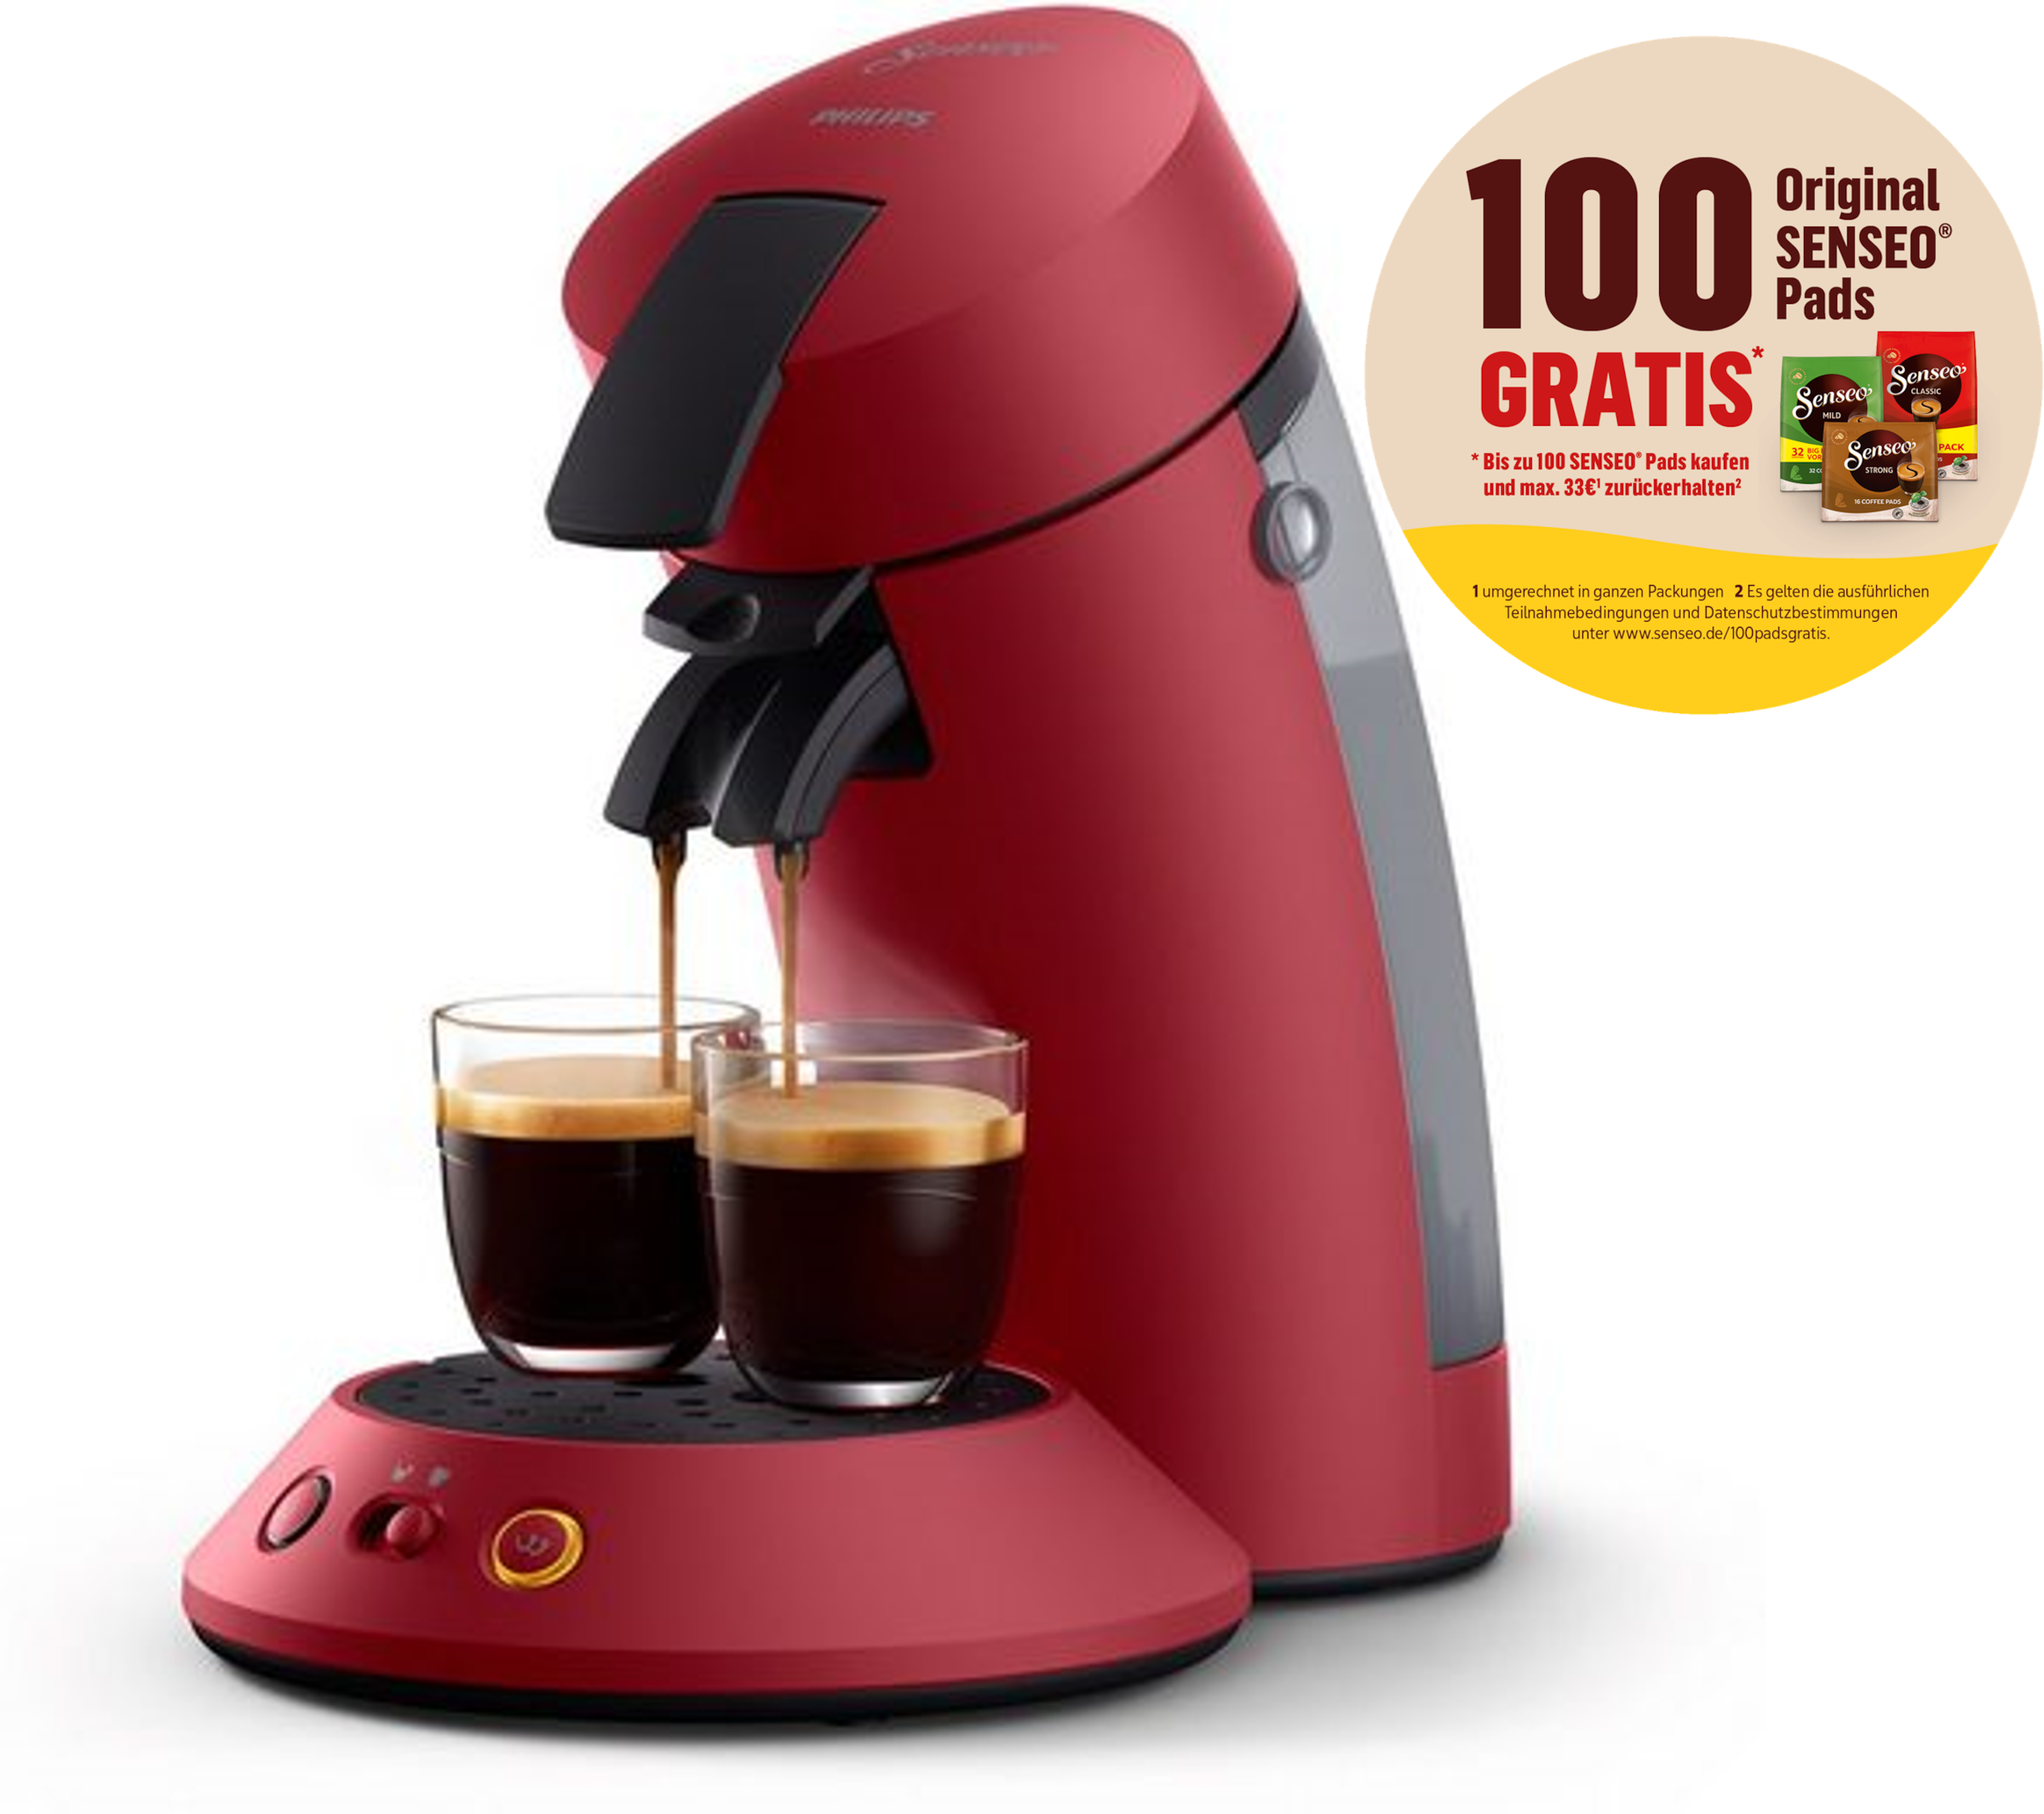 Philips Senseo Kaffeepadmaschine »Orginal Plus CSA210/90«, aus 28% recyceltem Plastik und mit 2 Kaffeespezialitäten, dunkelrot